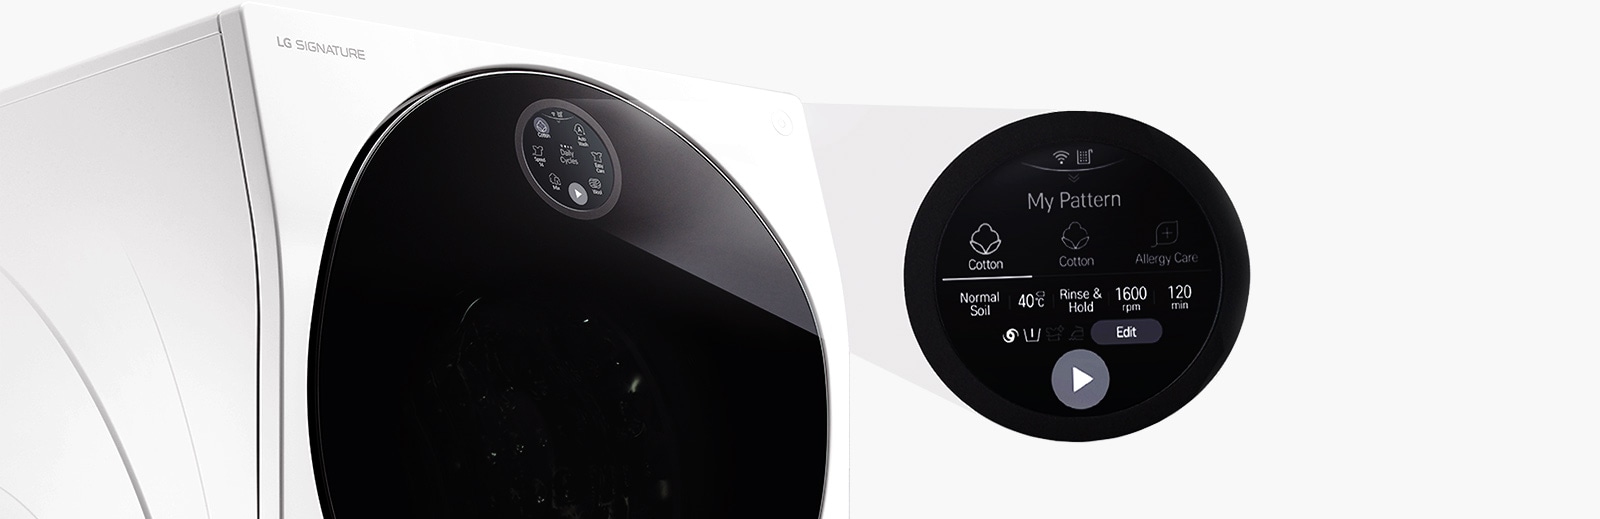 LG SIGNATURE 及其 Quick Circle GUI 放置在具有白色背景畫面的中央位置。